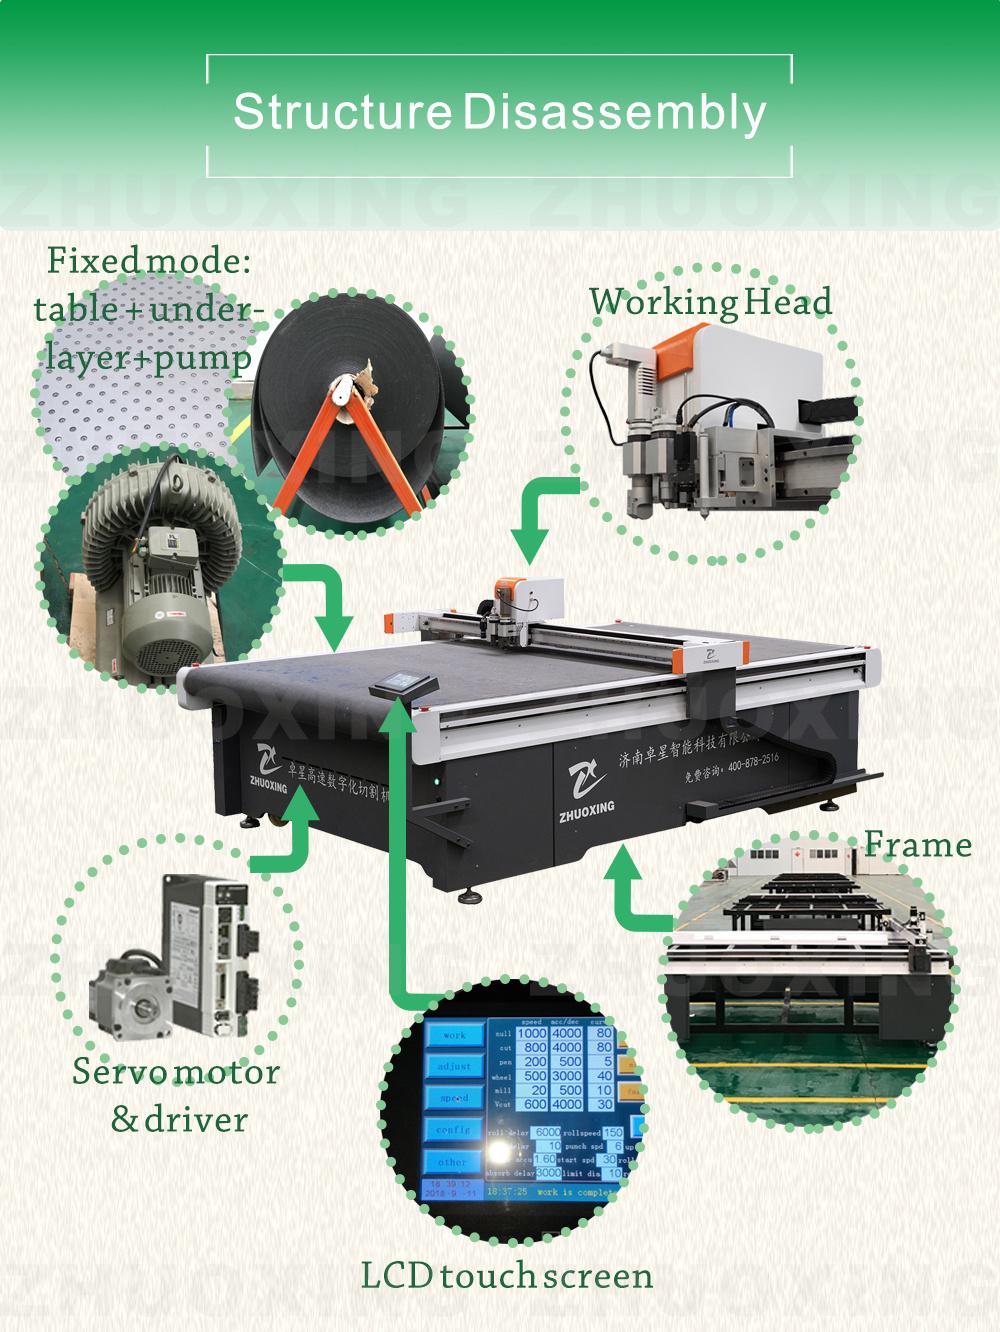 Zhuoxing Factory Price Advertising Equipment Not Laser Cutting Machine